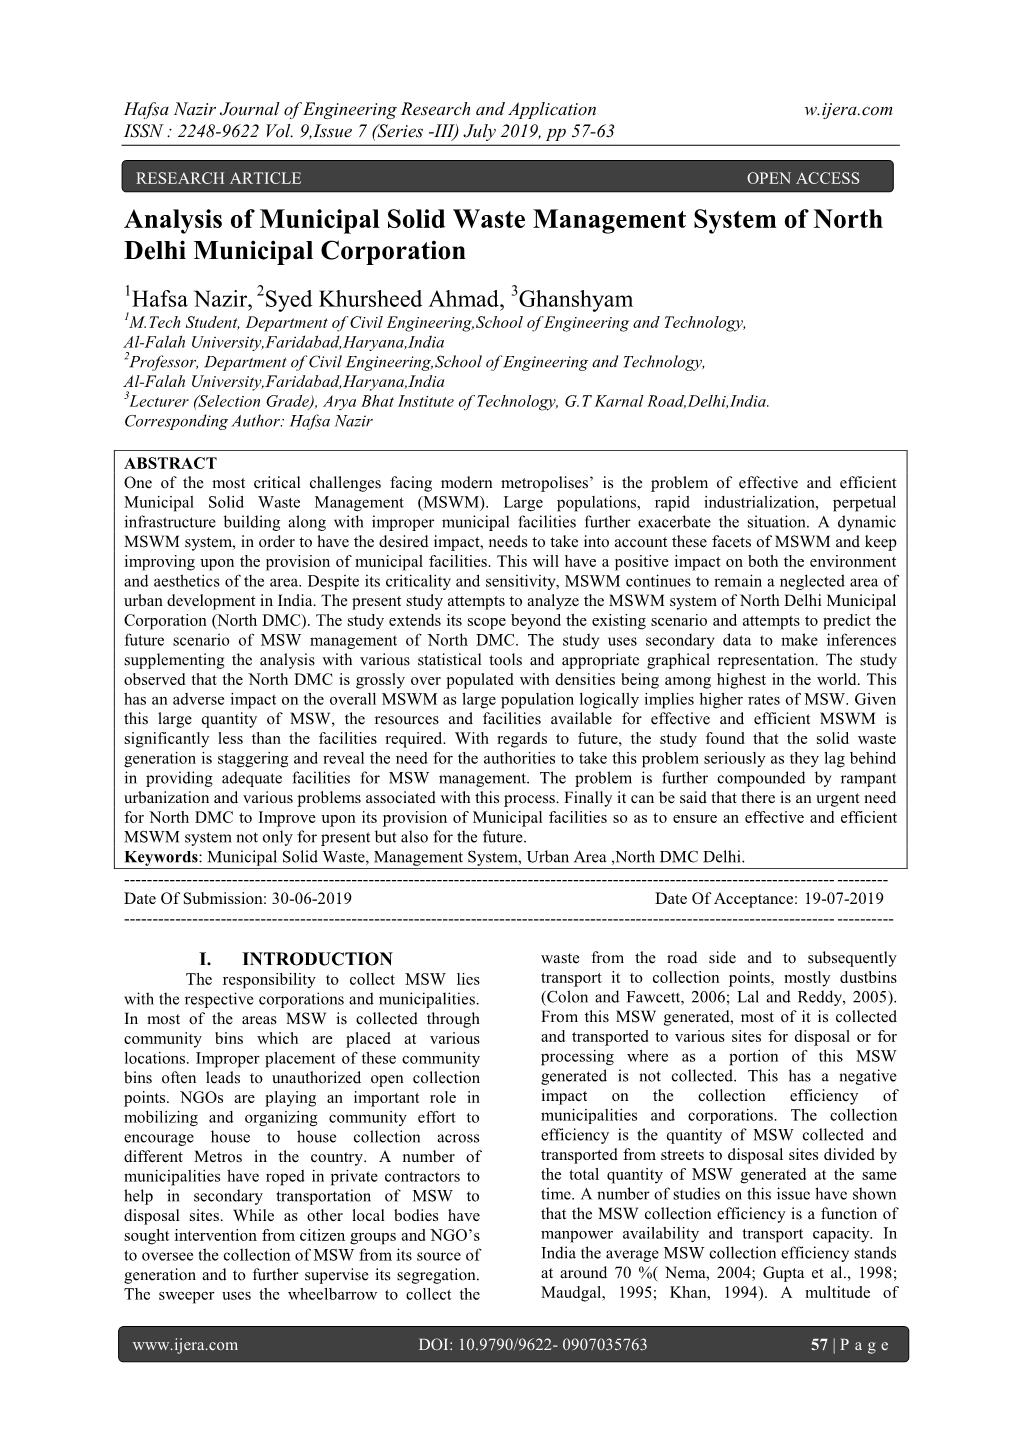 Analysis of Municipal Solid Waste Management System of North Delhi Municipal Corporation